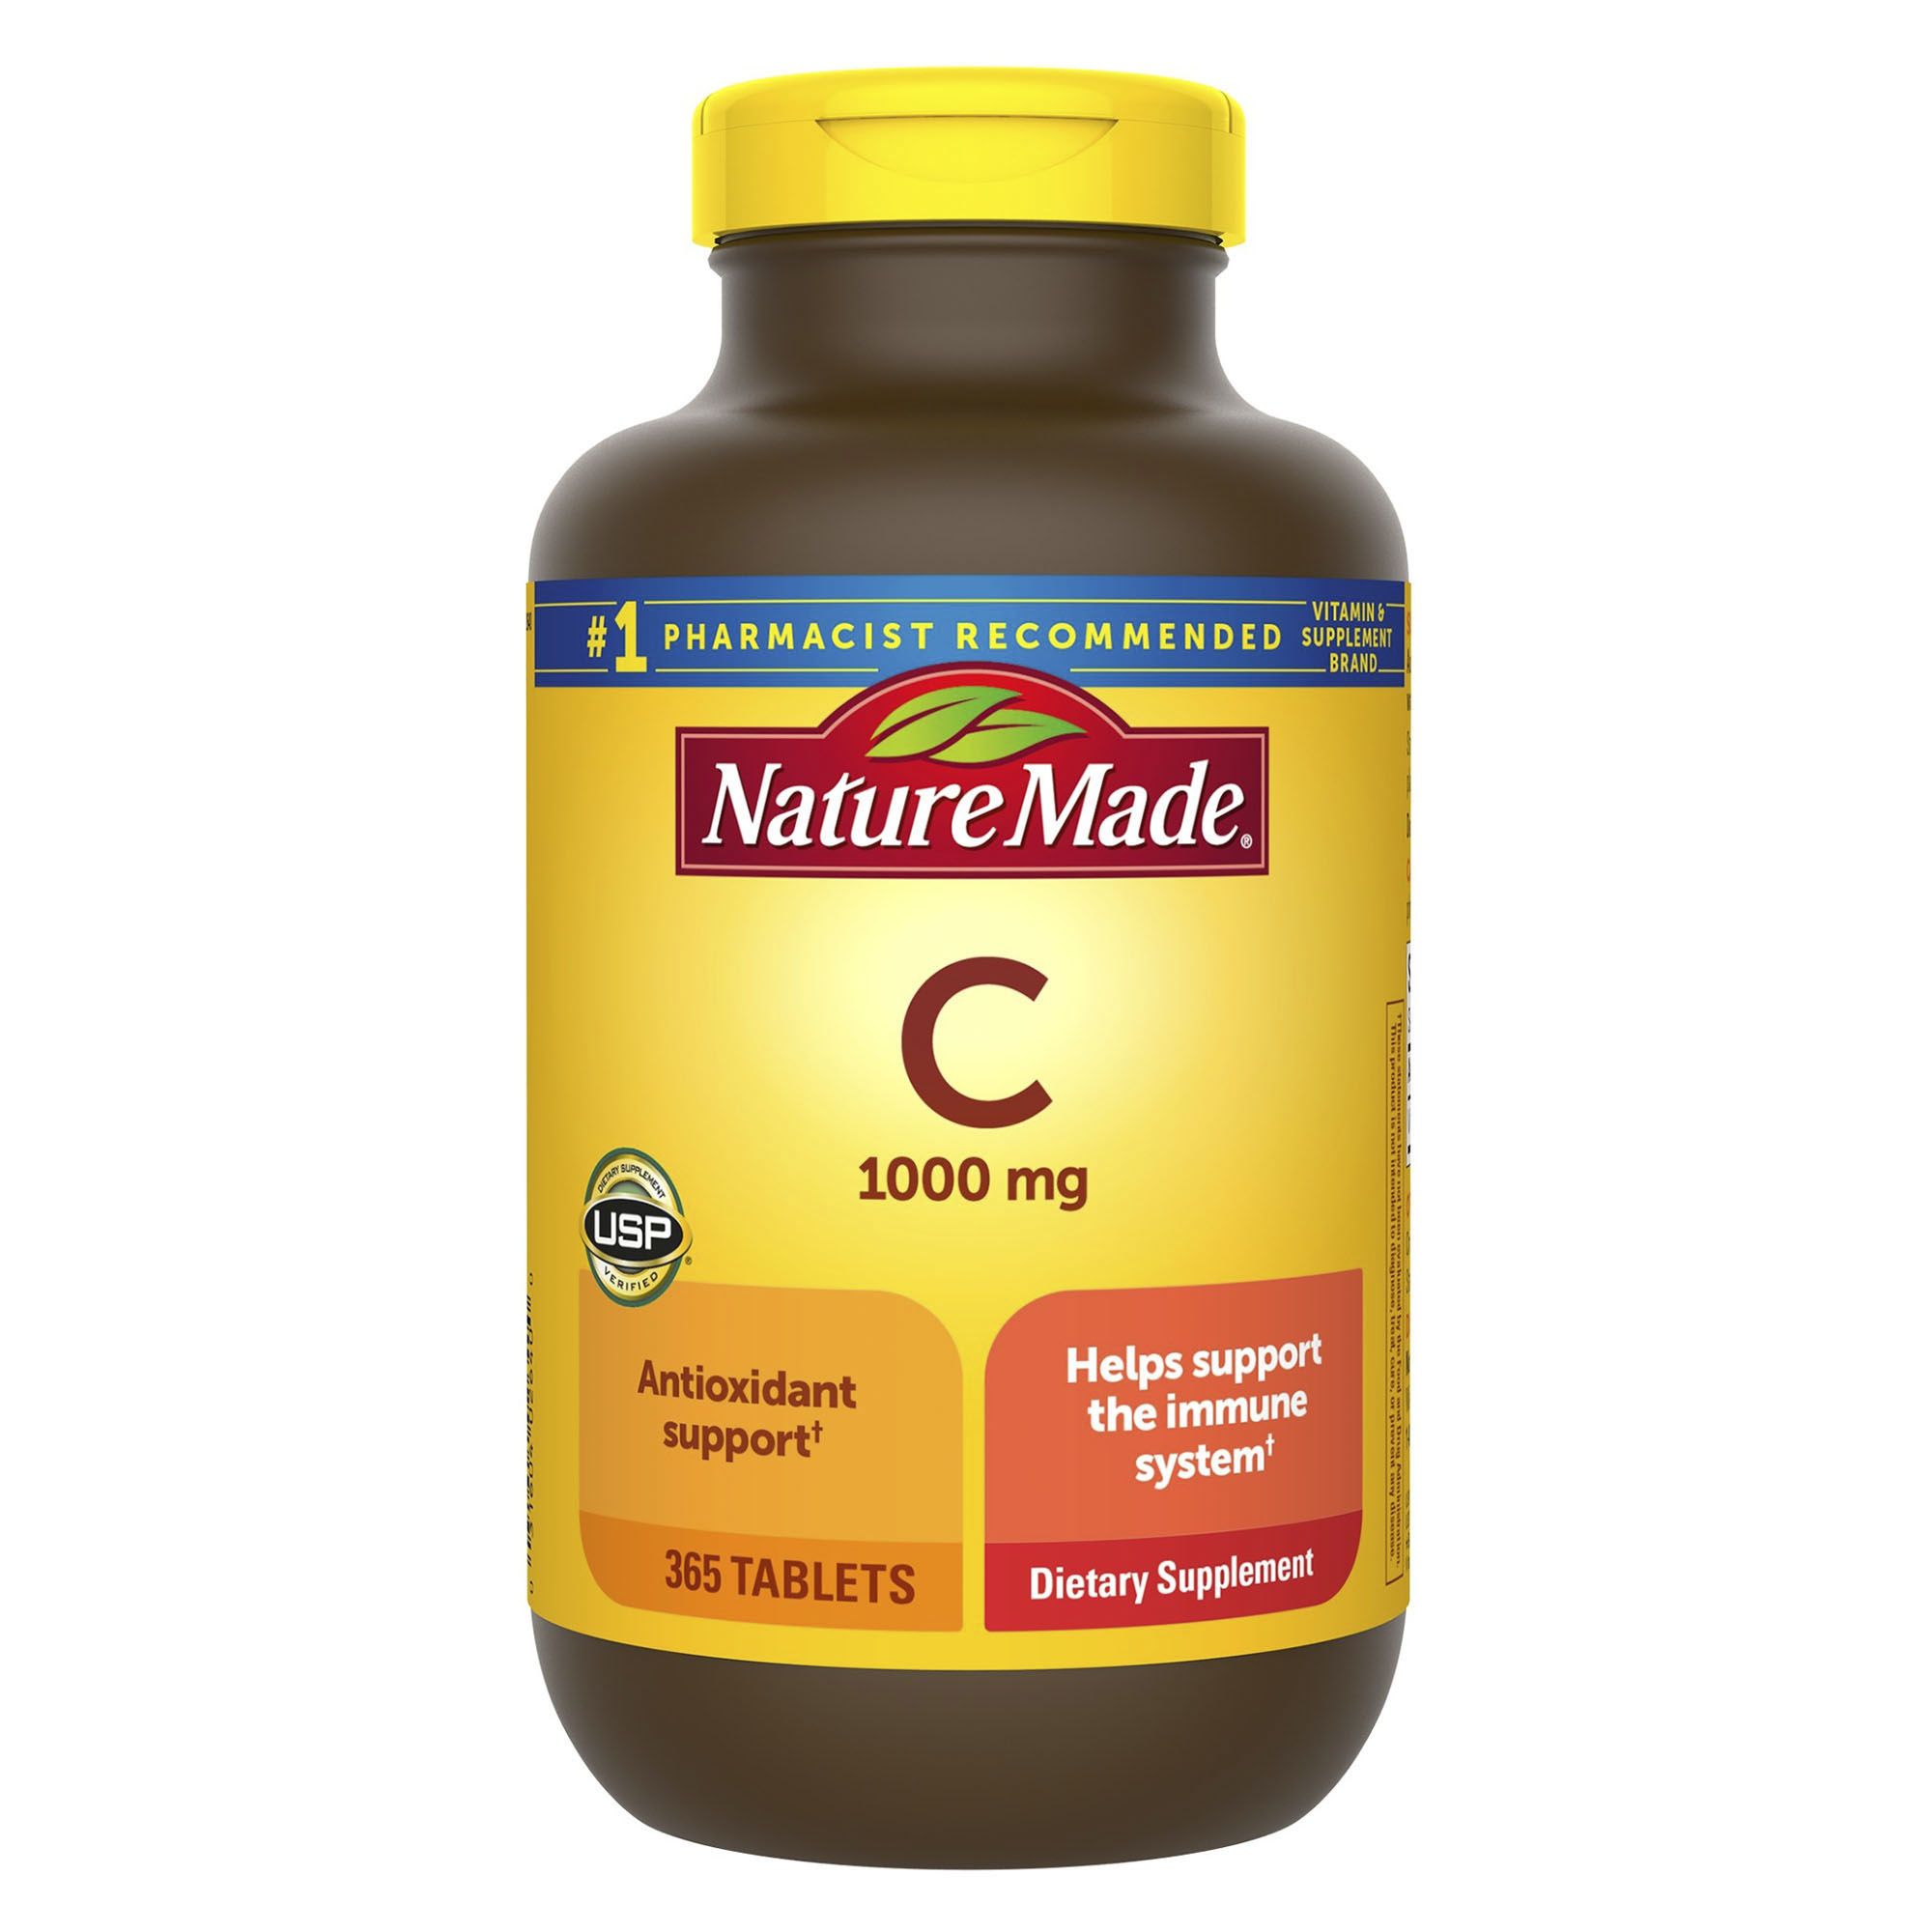 Nature Made Vitamin C 1000 mg Tablets, 356 ct.